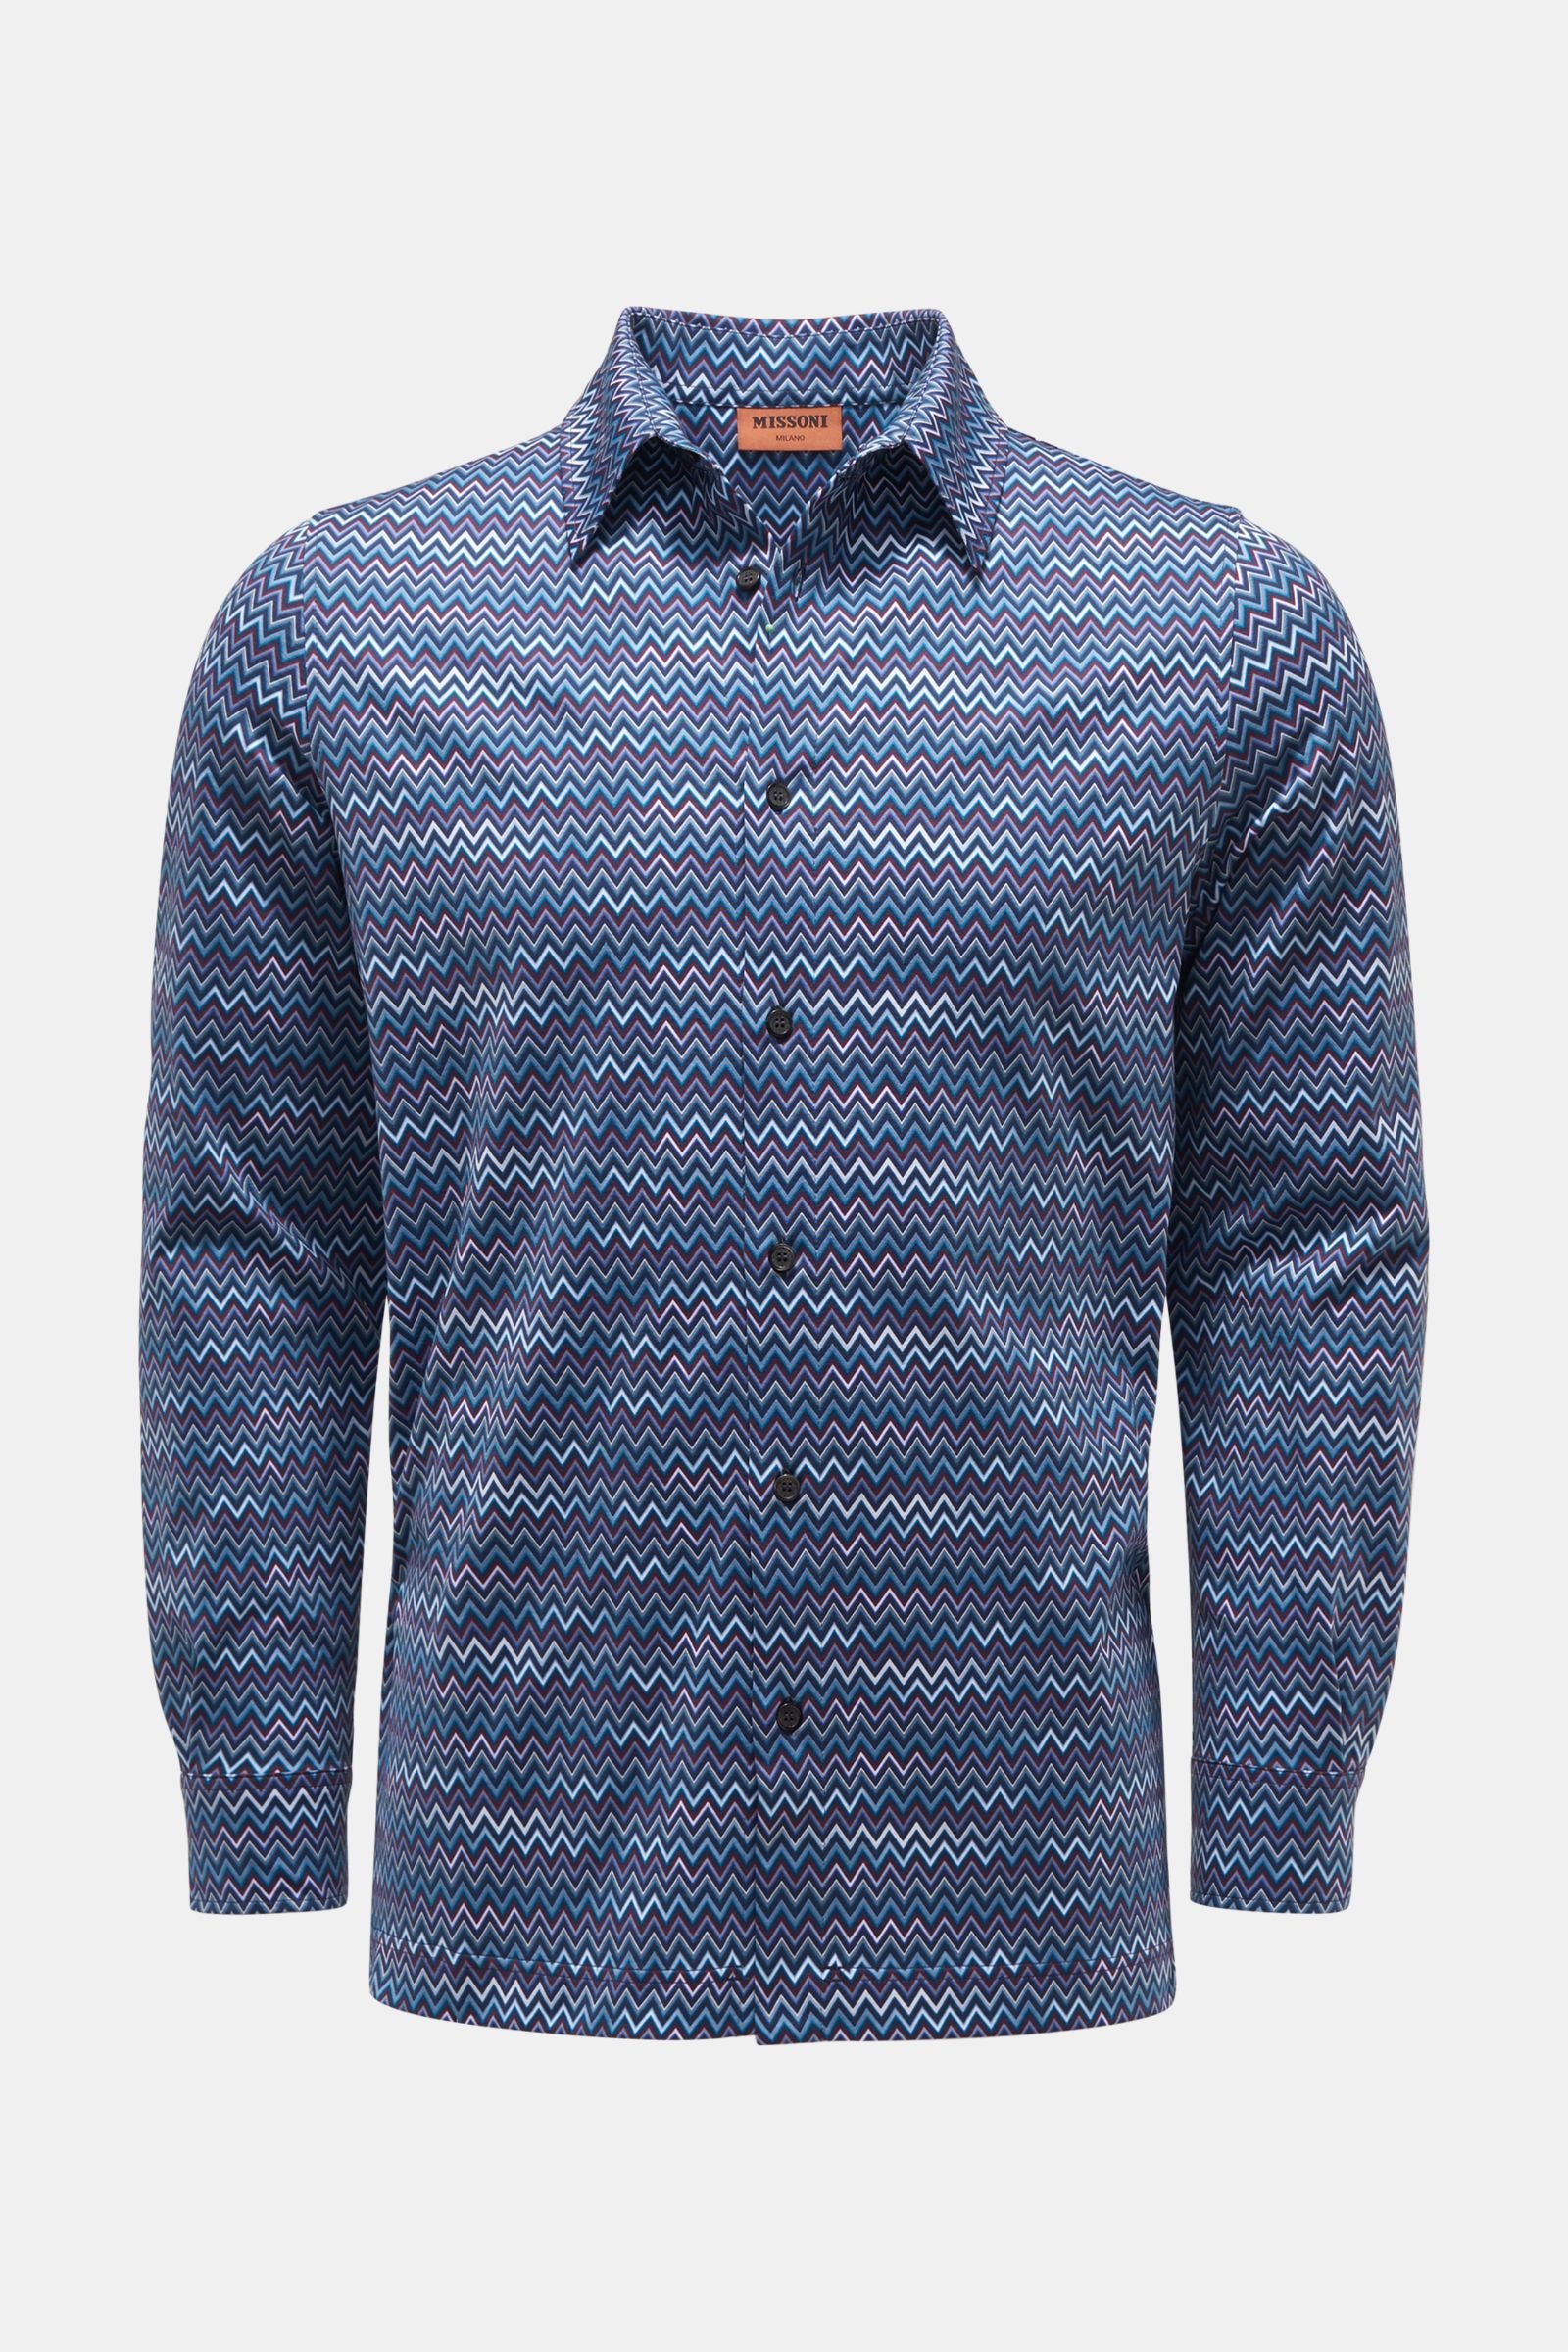 Jersey shirt Kent collar grey-blue/burgundy patterned